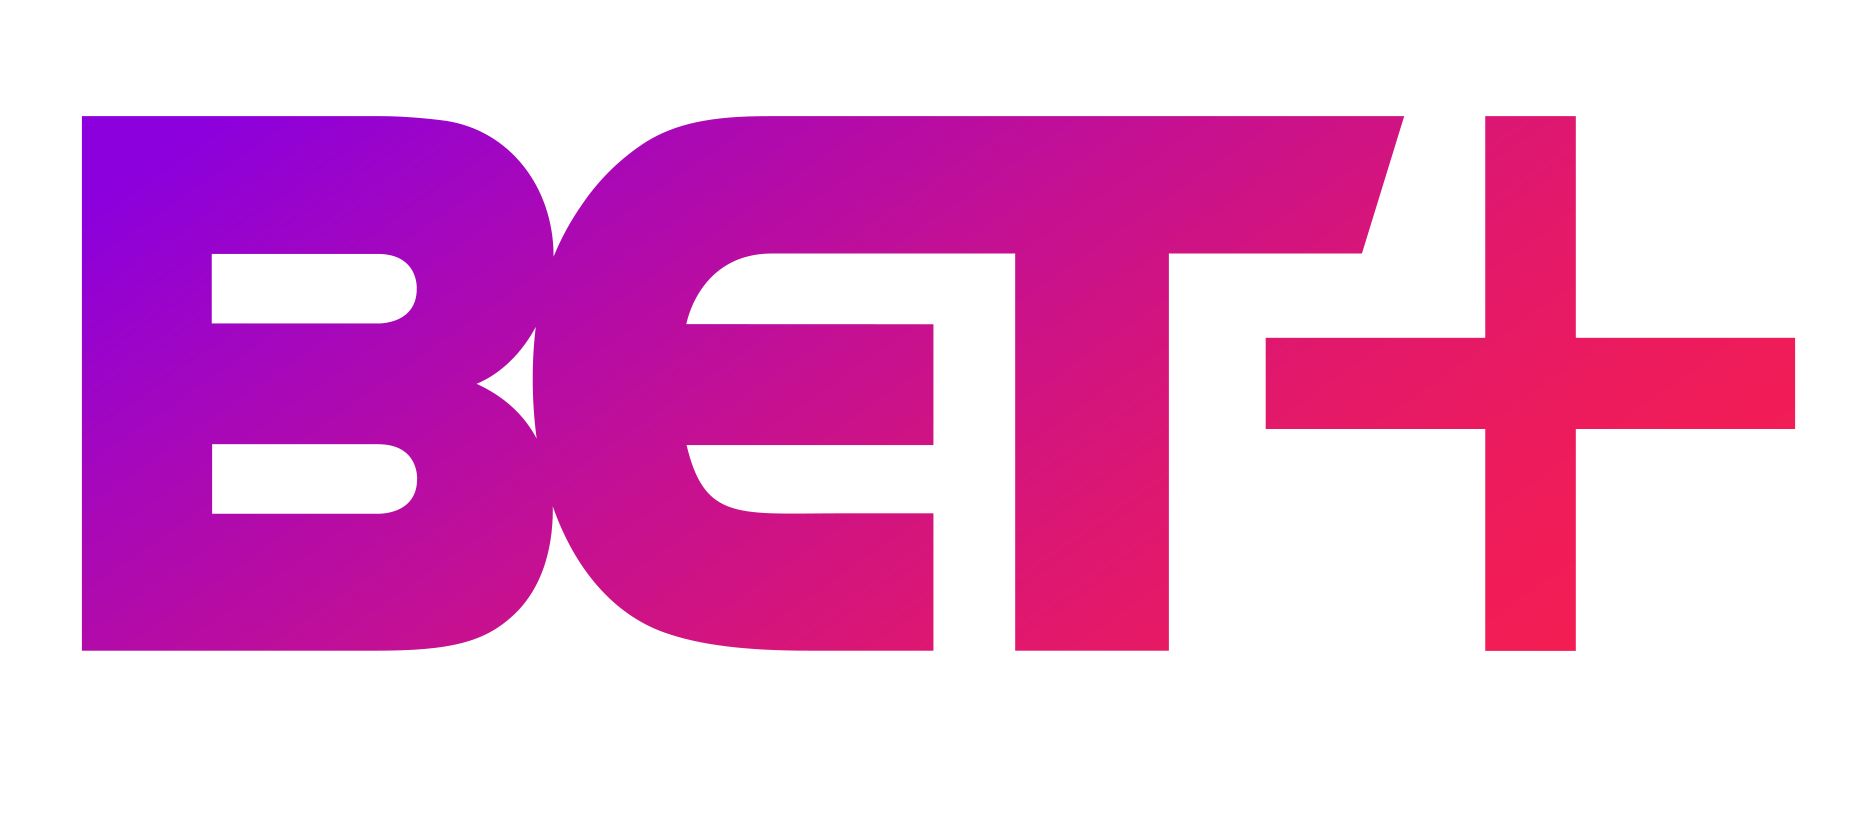 bet more logo